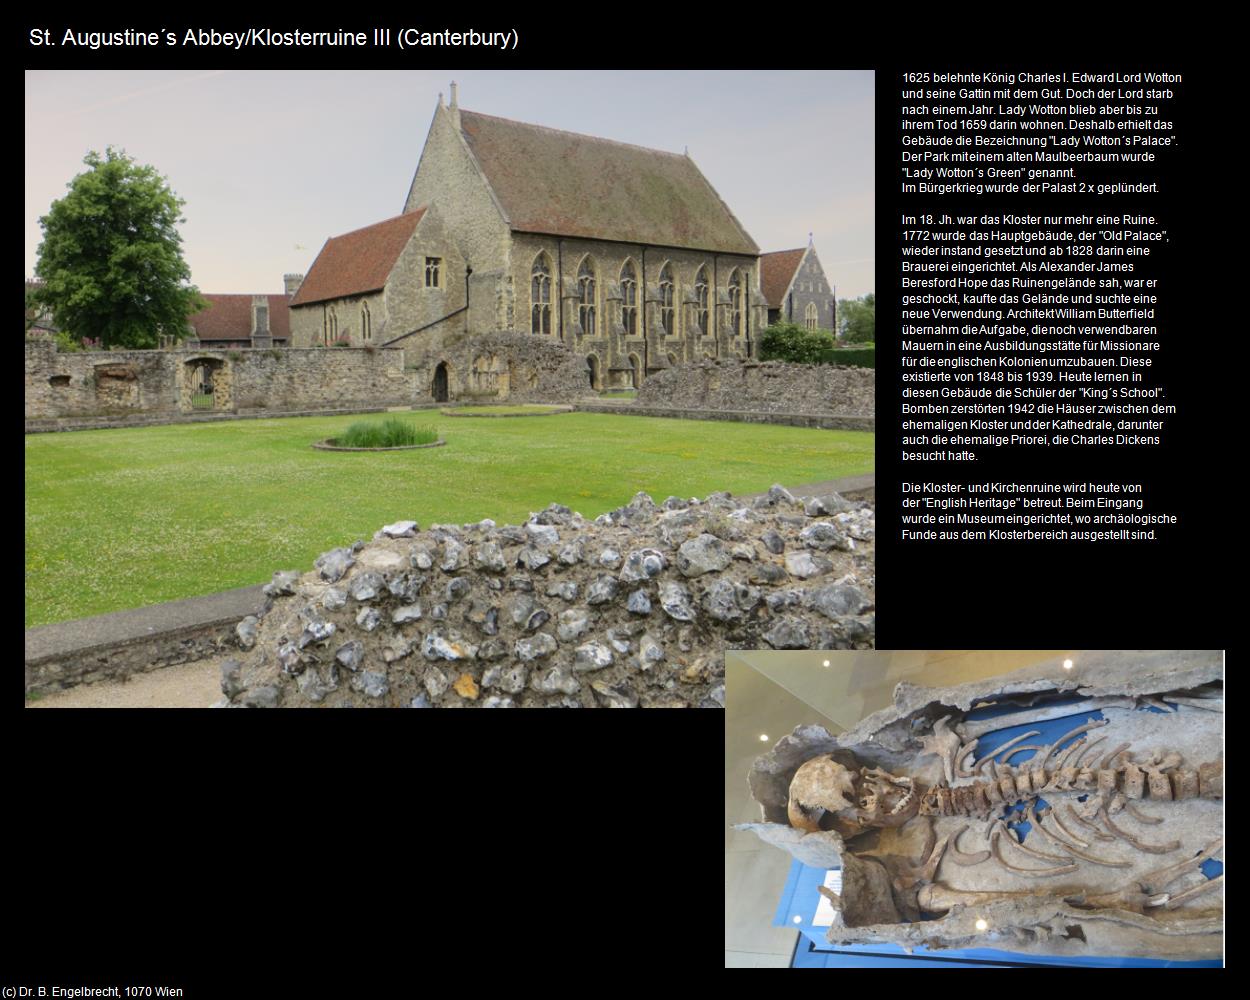 St. Augustine‘s Abbey/Klosterruine III (Canterbury, England) in Kulturatlas-ENGLAND und WALES